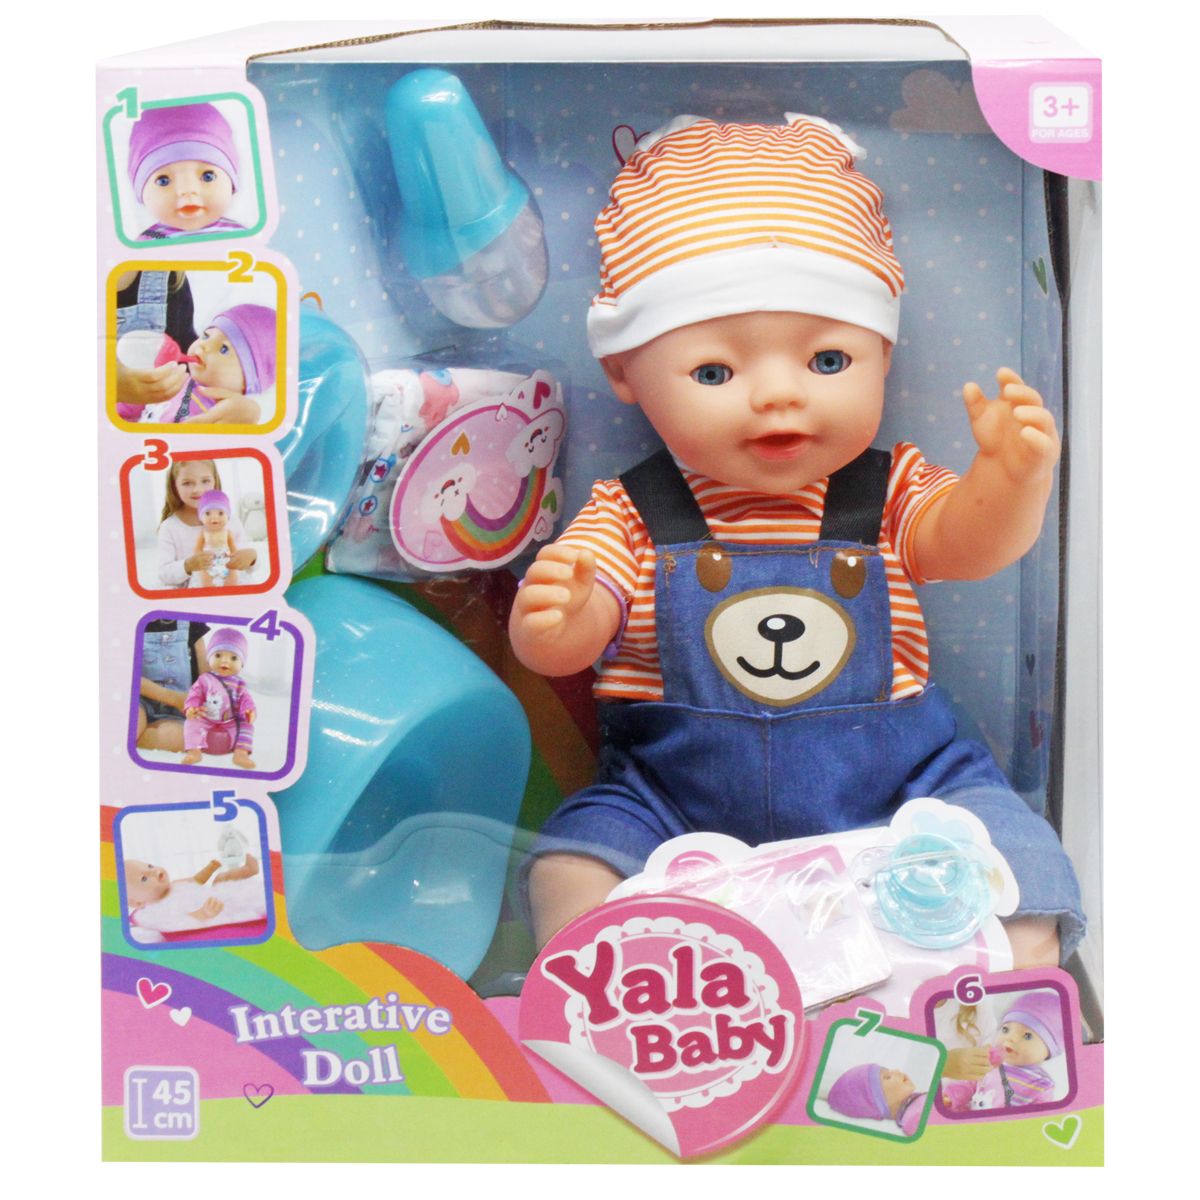 Интерактивный пупс "Yala Baby"